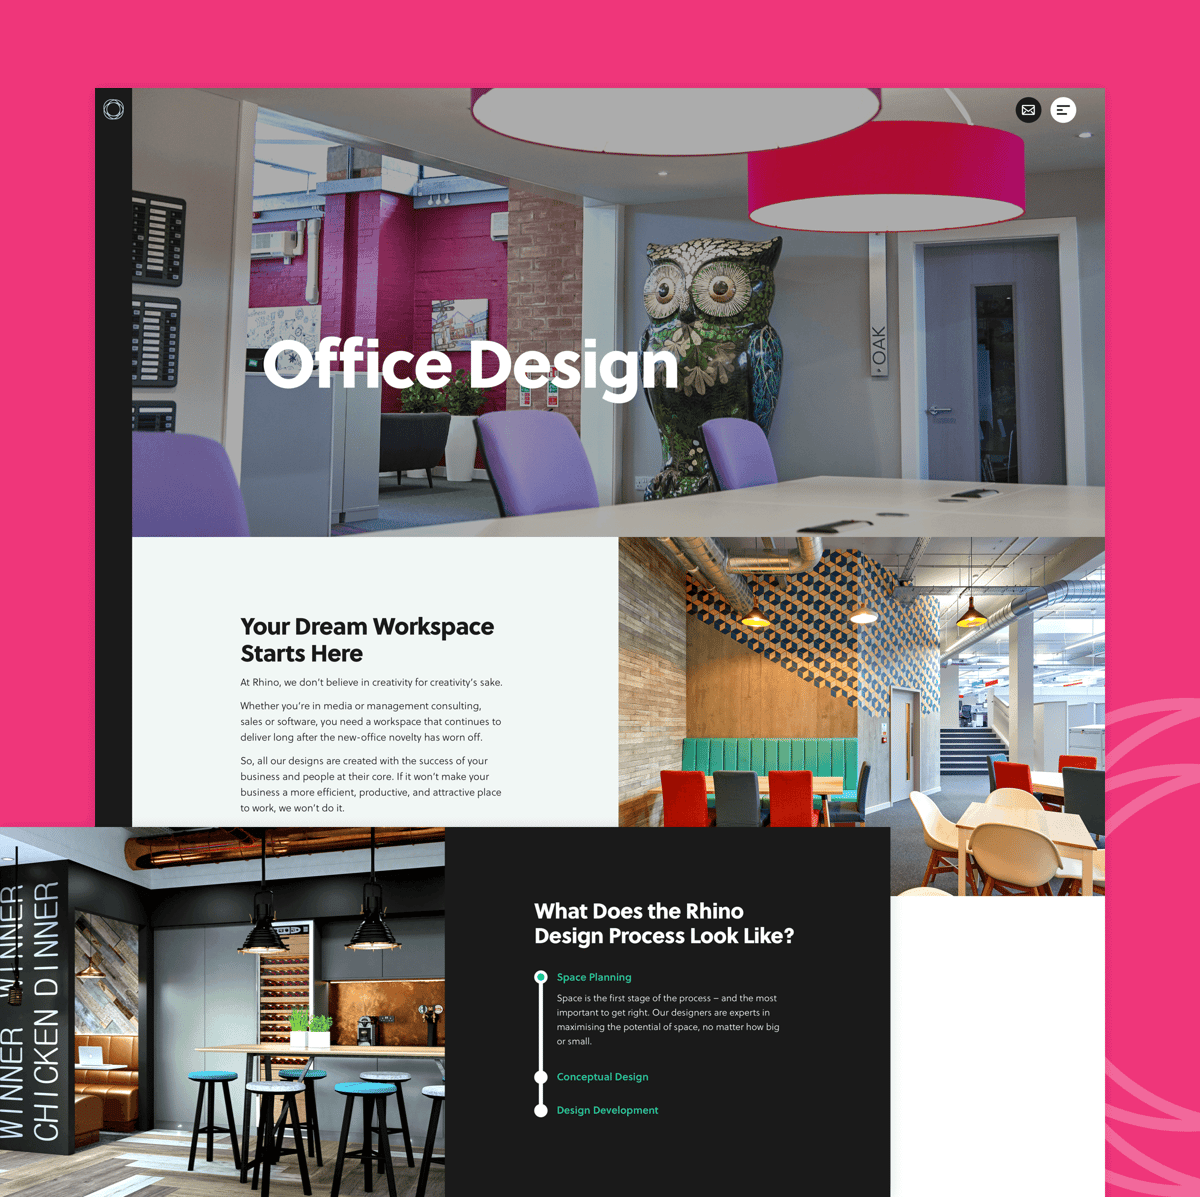 Rhino_office_design